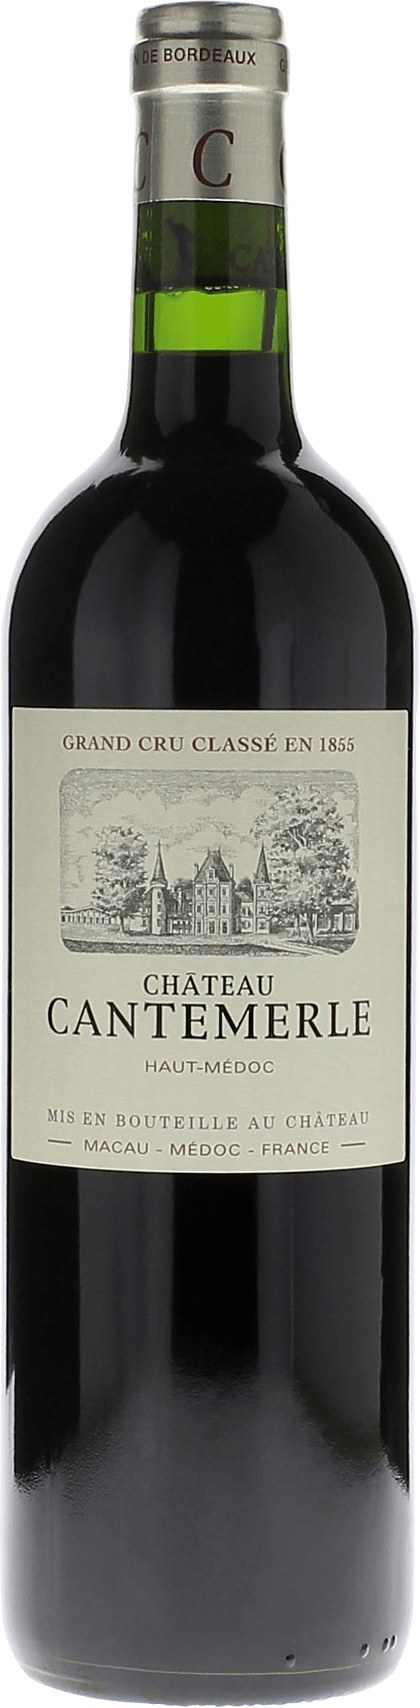 Cantemerle 1999 5me Grand cru class Mdoc, Bordeaux rouge